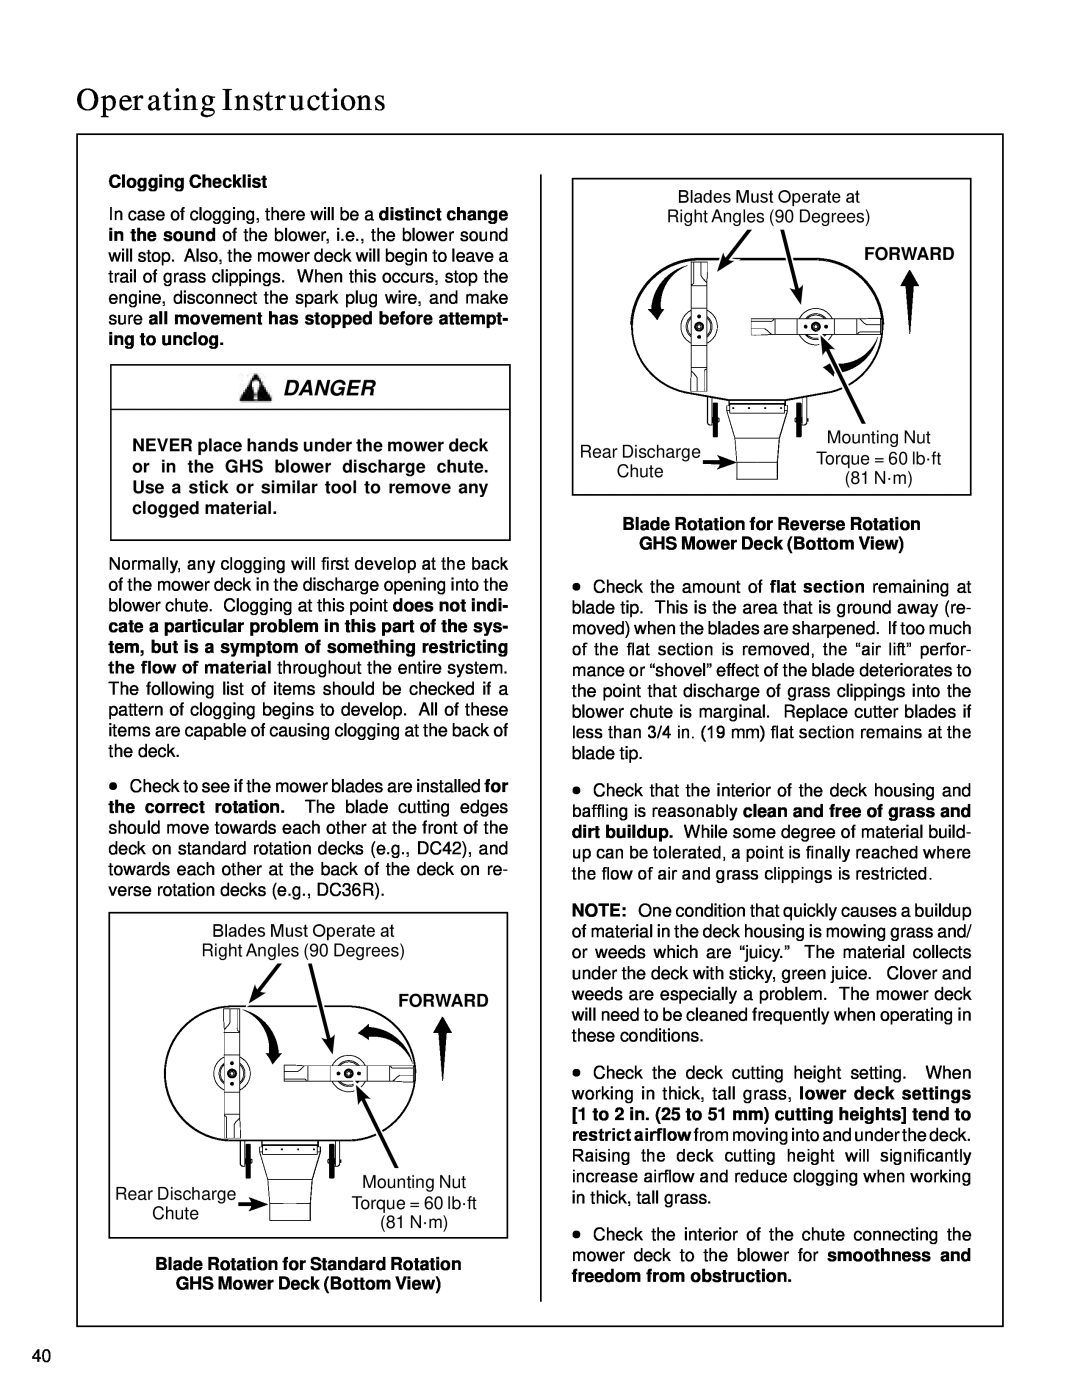 Walker S14 manual Clogging Checklist, Forward, Blade Rotation for Standard Rotation, GHS Mower Deck Bottom View, Danger 